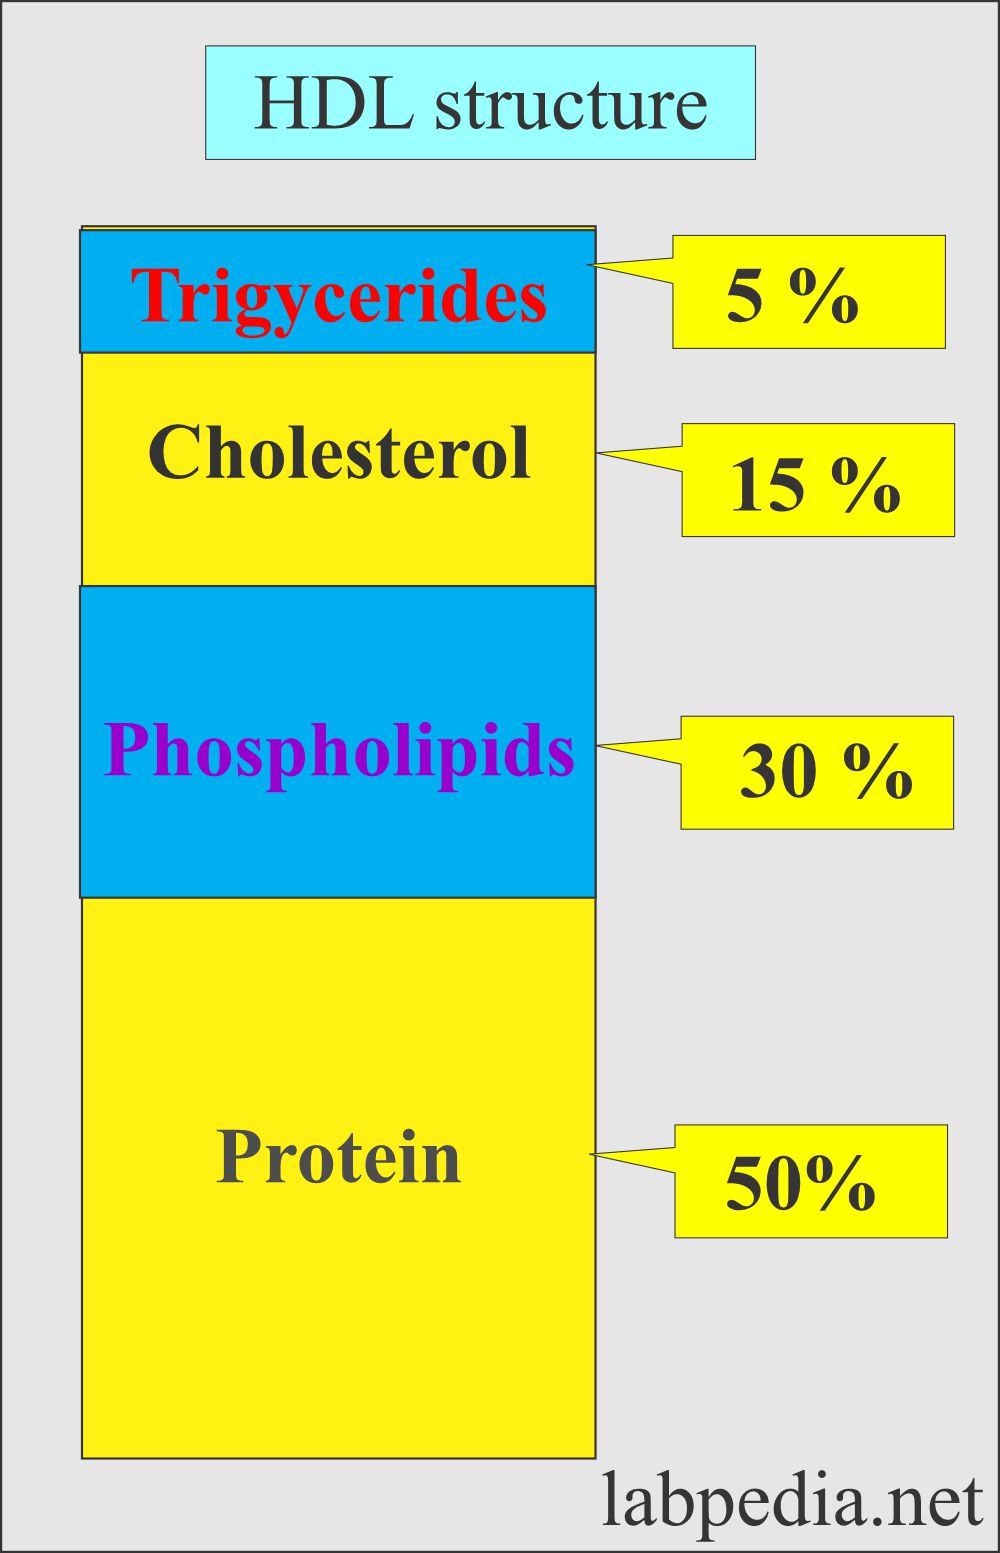 High-density lipoprotein (HDL)